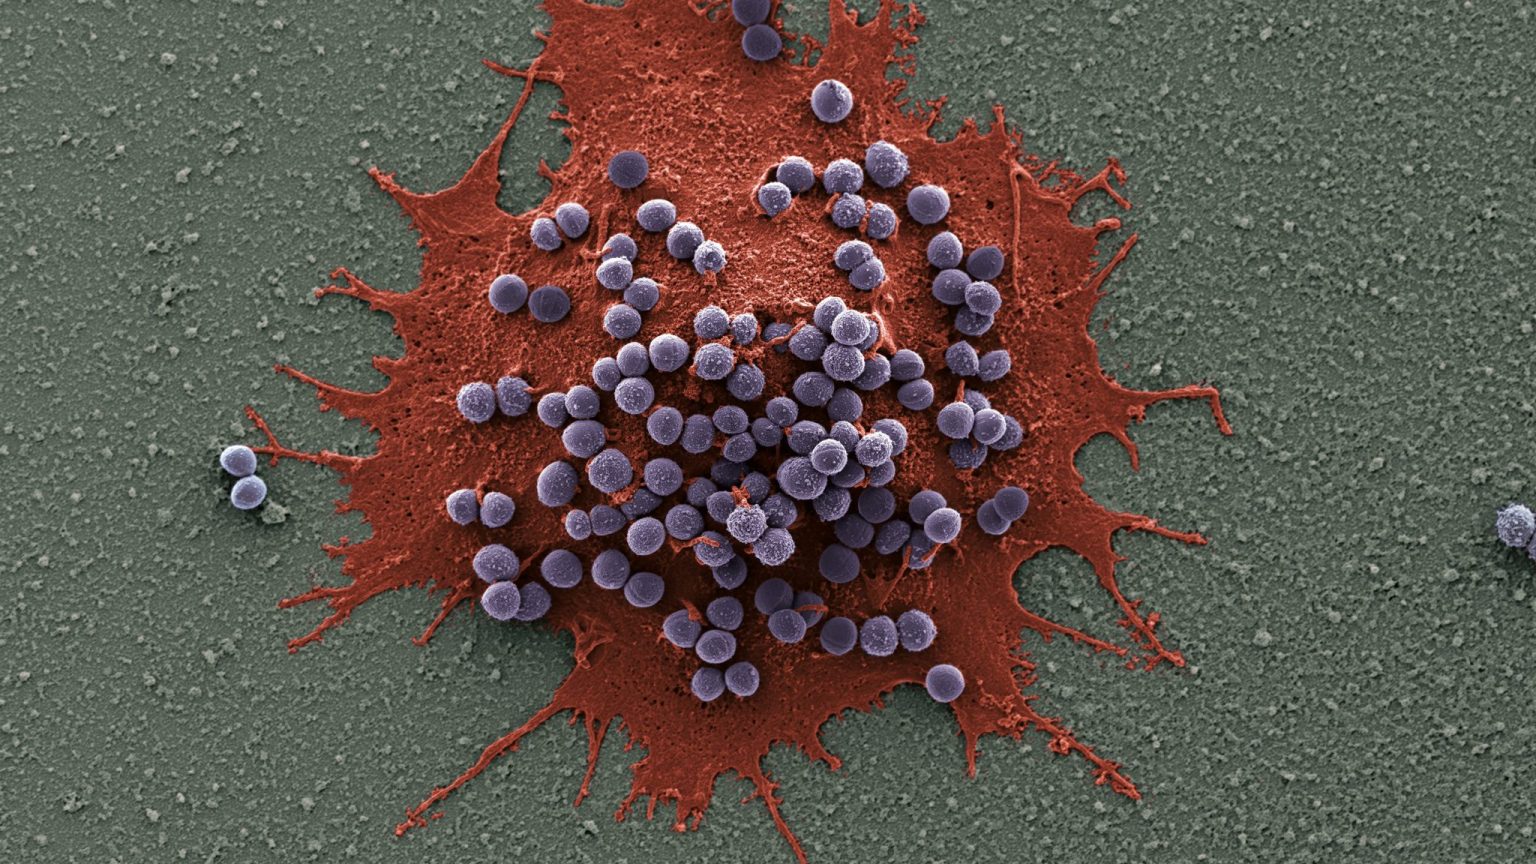 Drosophila macrophages engulfing Staphylococcus aureus bacteria | © Claudia Melcarne/ EPFL